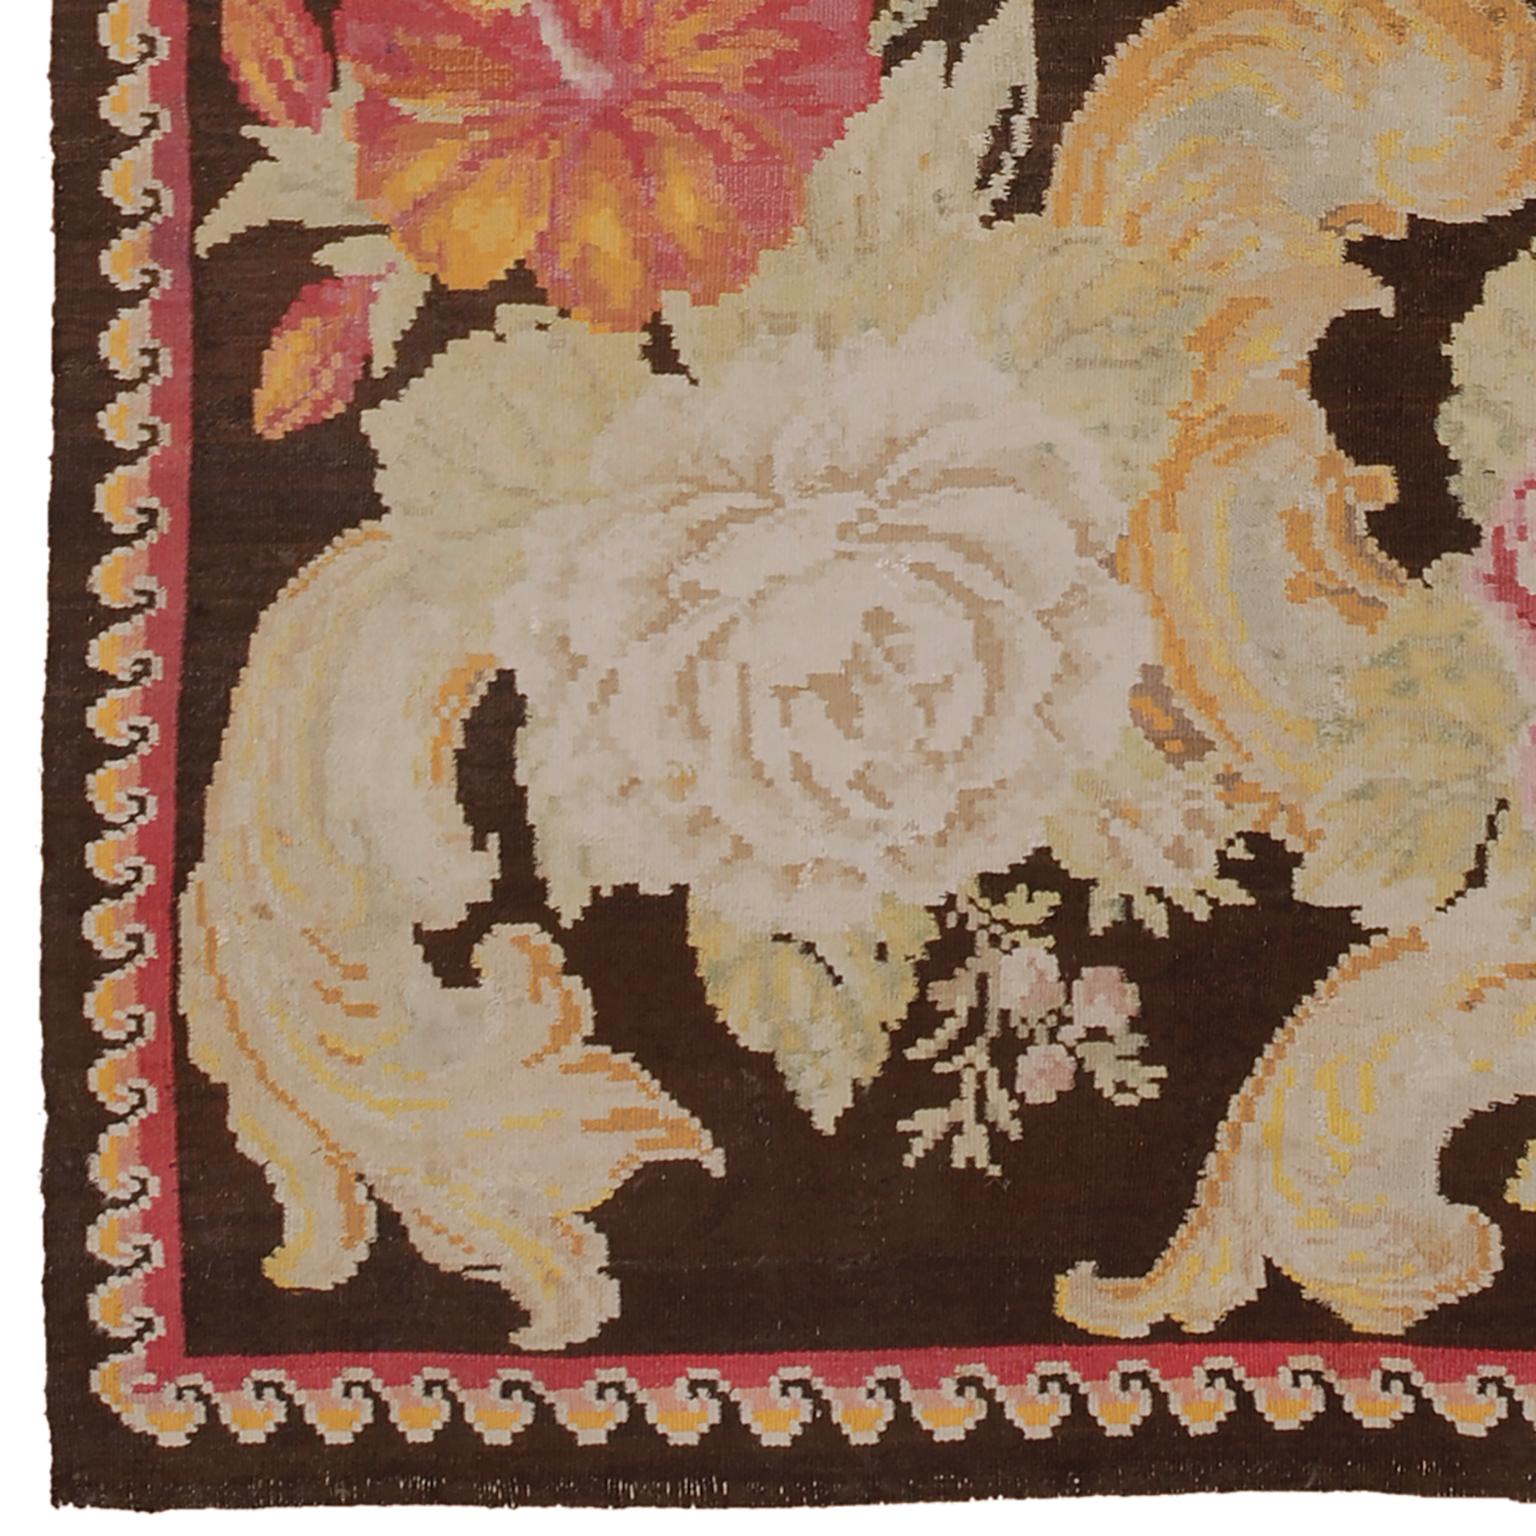 Antiker Teppich aus Bessarabien, 1890.
Russland, um 1890.
Handgewebt.
 